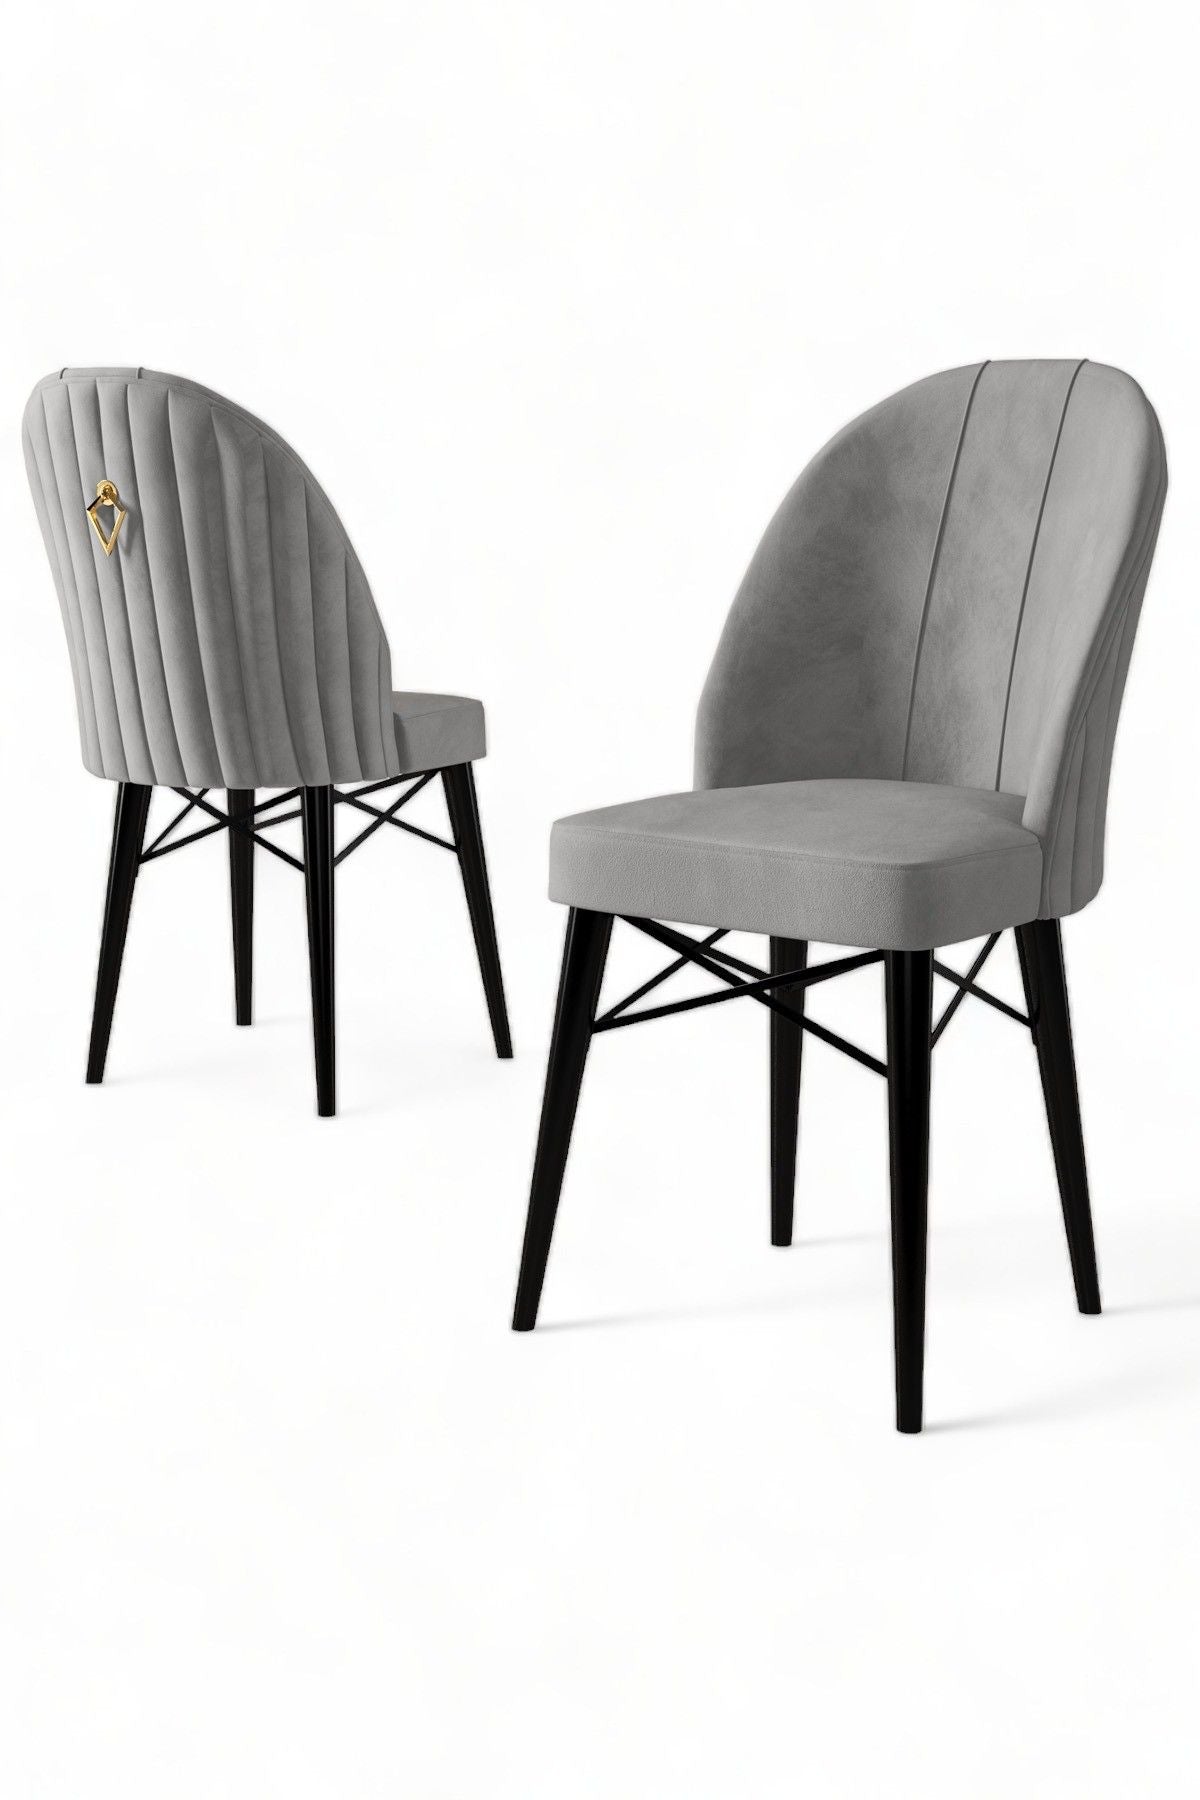 Ritim - Grey, Black - Chair Set (4 Pieces)